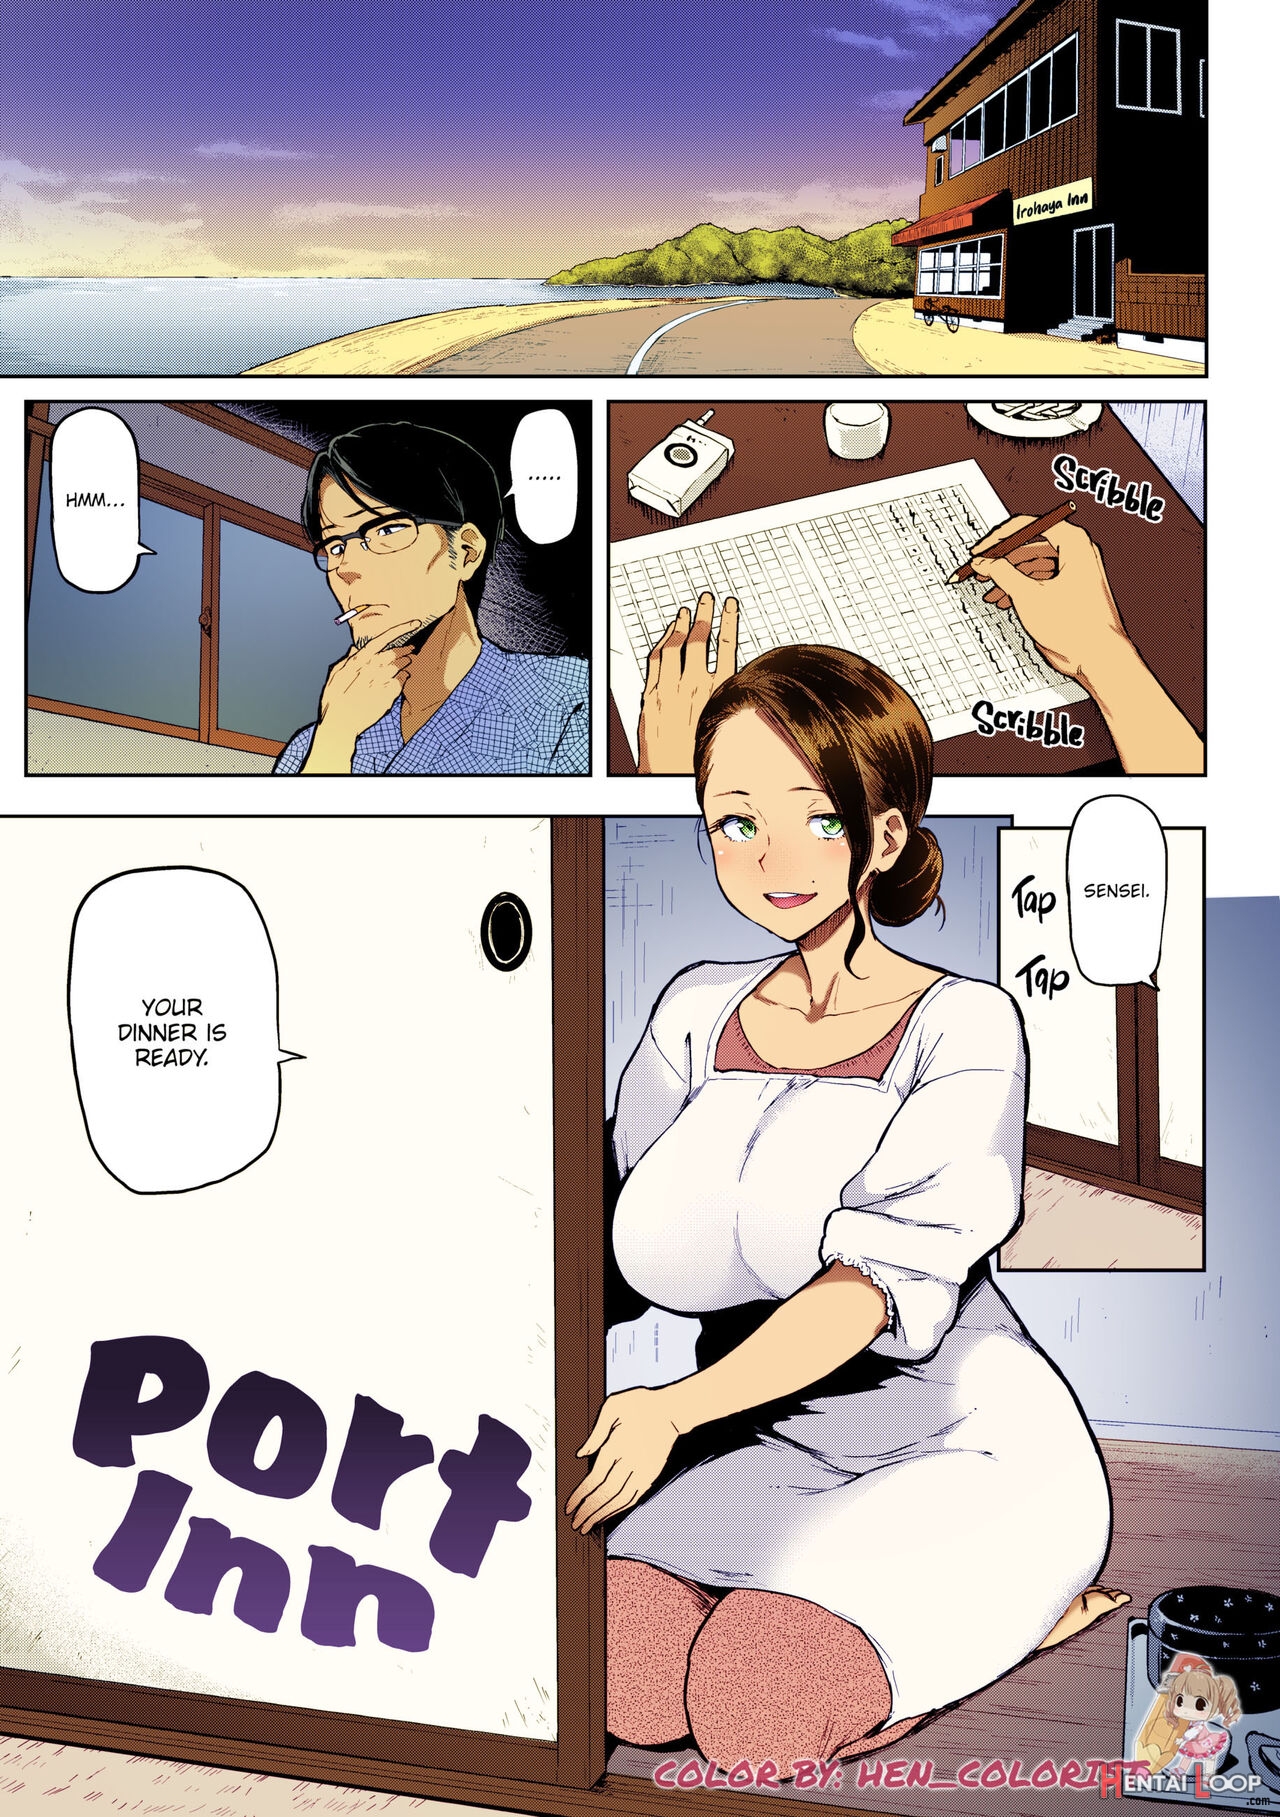 Port Inn (by Meme50) - Hentai doujinshi for free at HentaiLoop